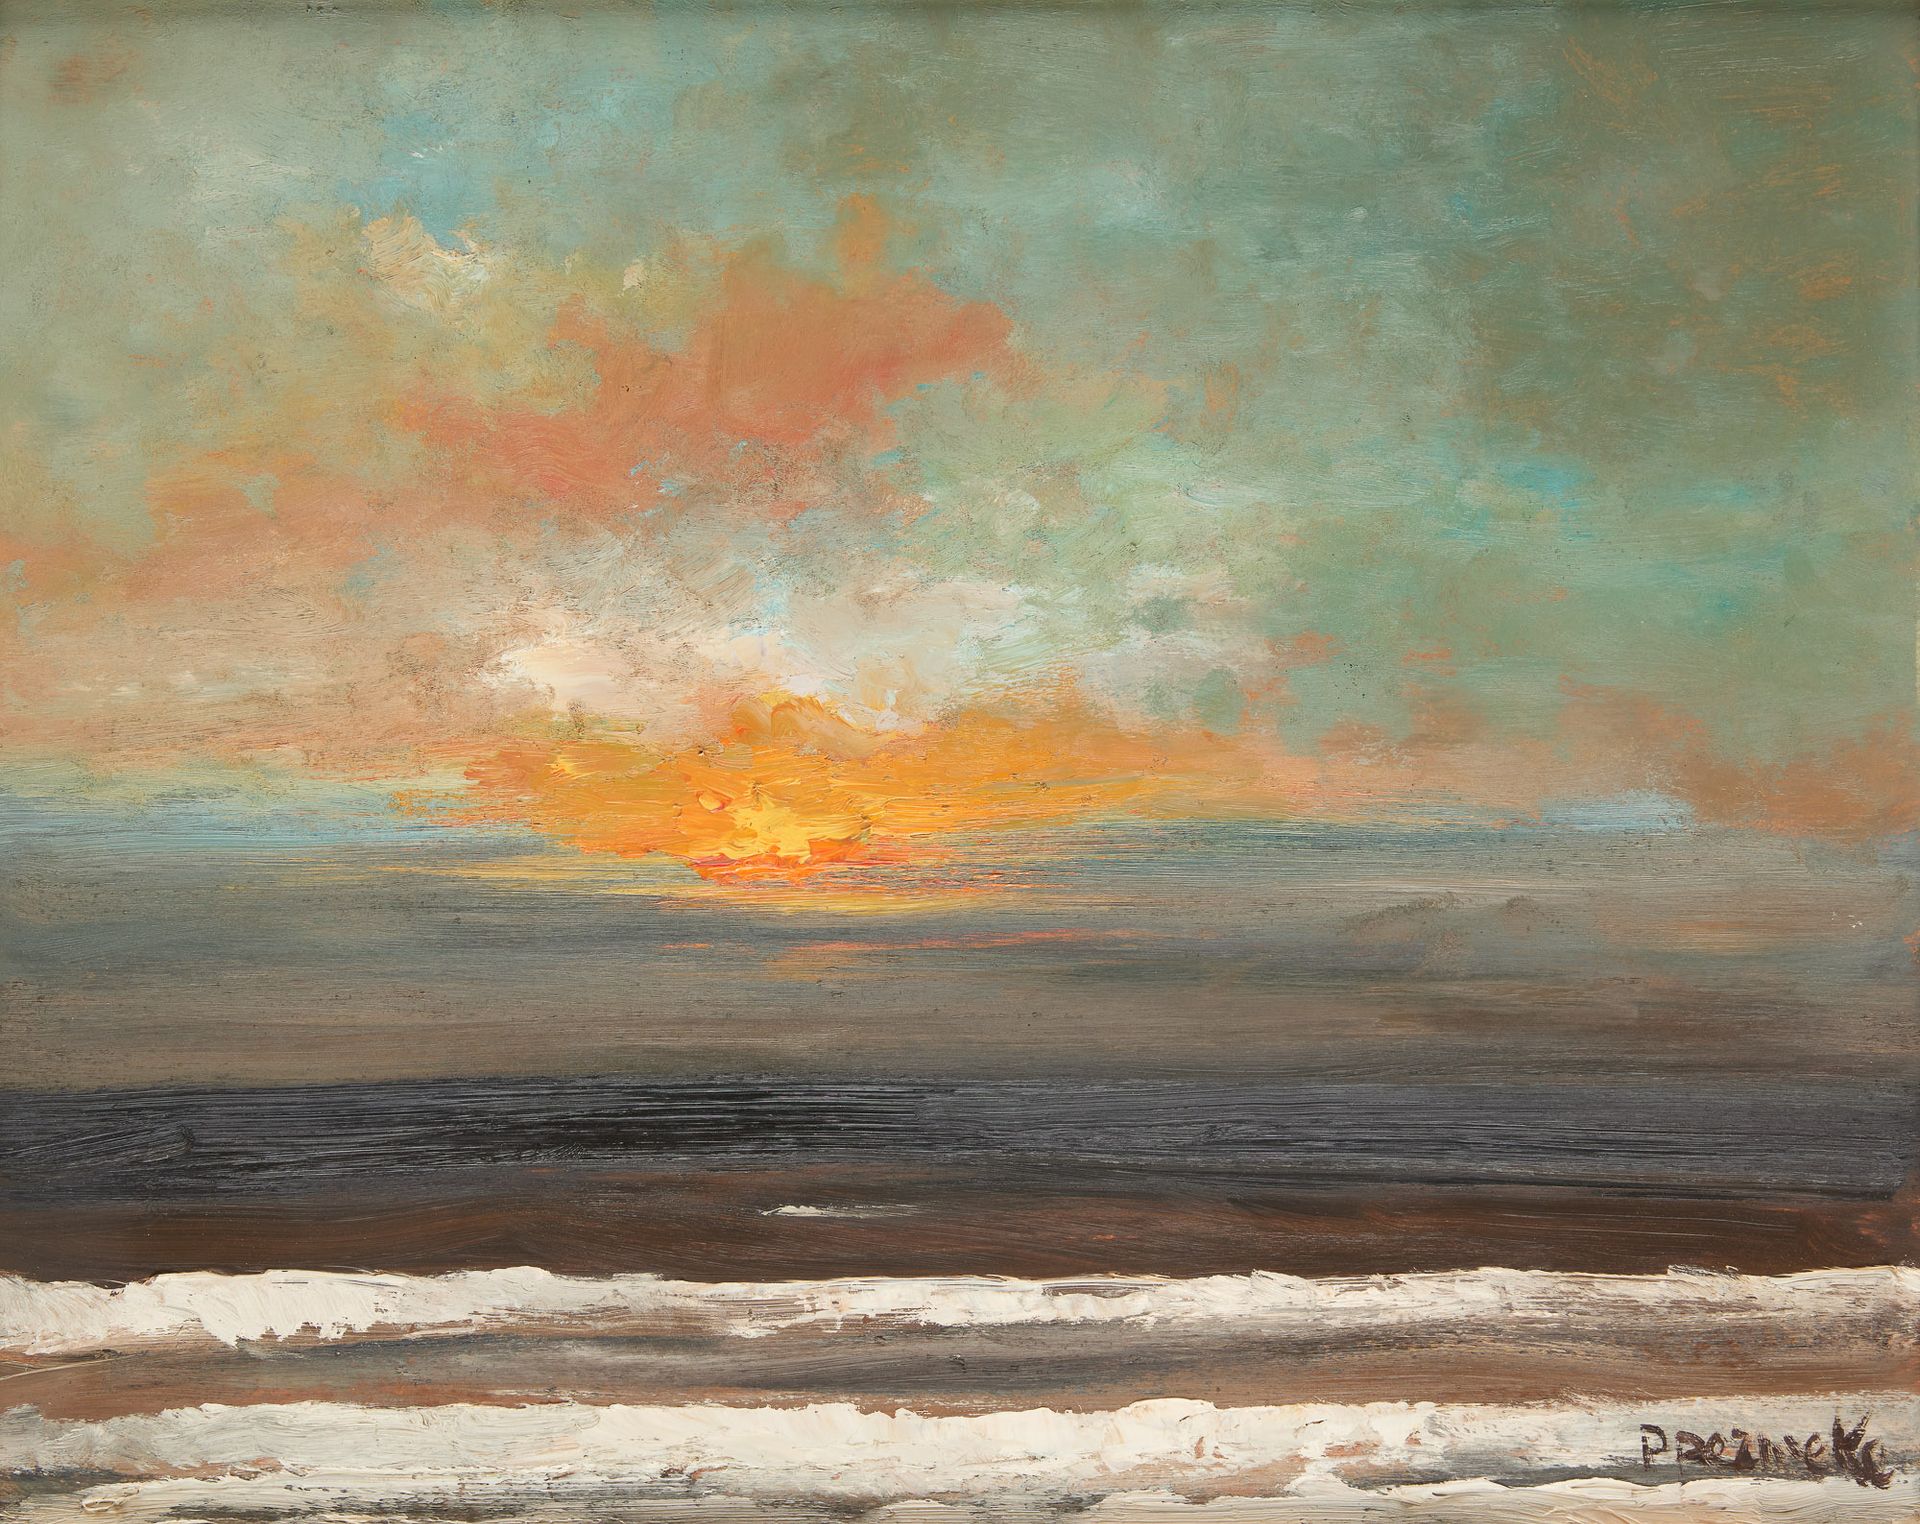 Paul PERMEKE École belge (1918-1990) 板上油画：北海的日落。

签名：P. Permeke。

尺寸：40 x 50厘米。